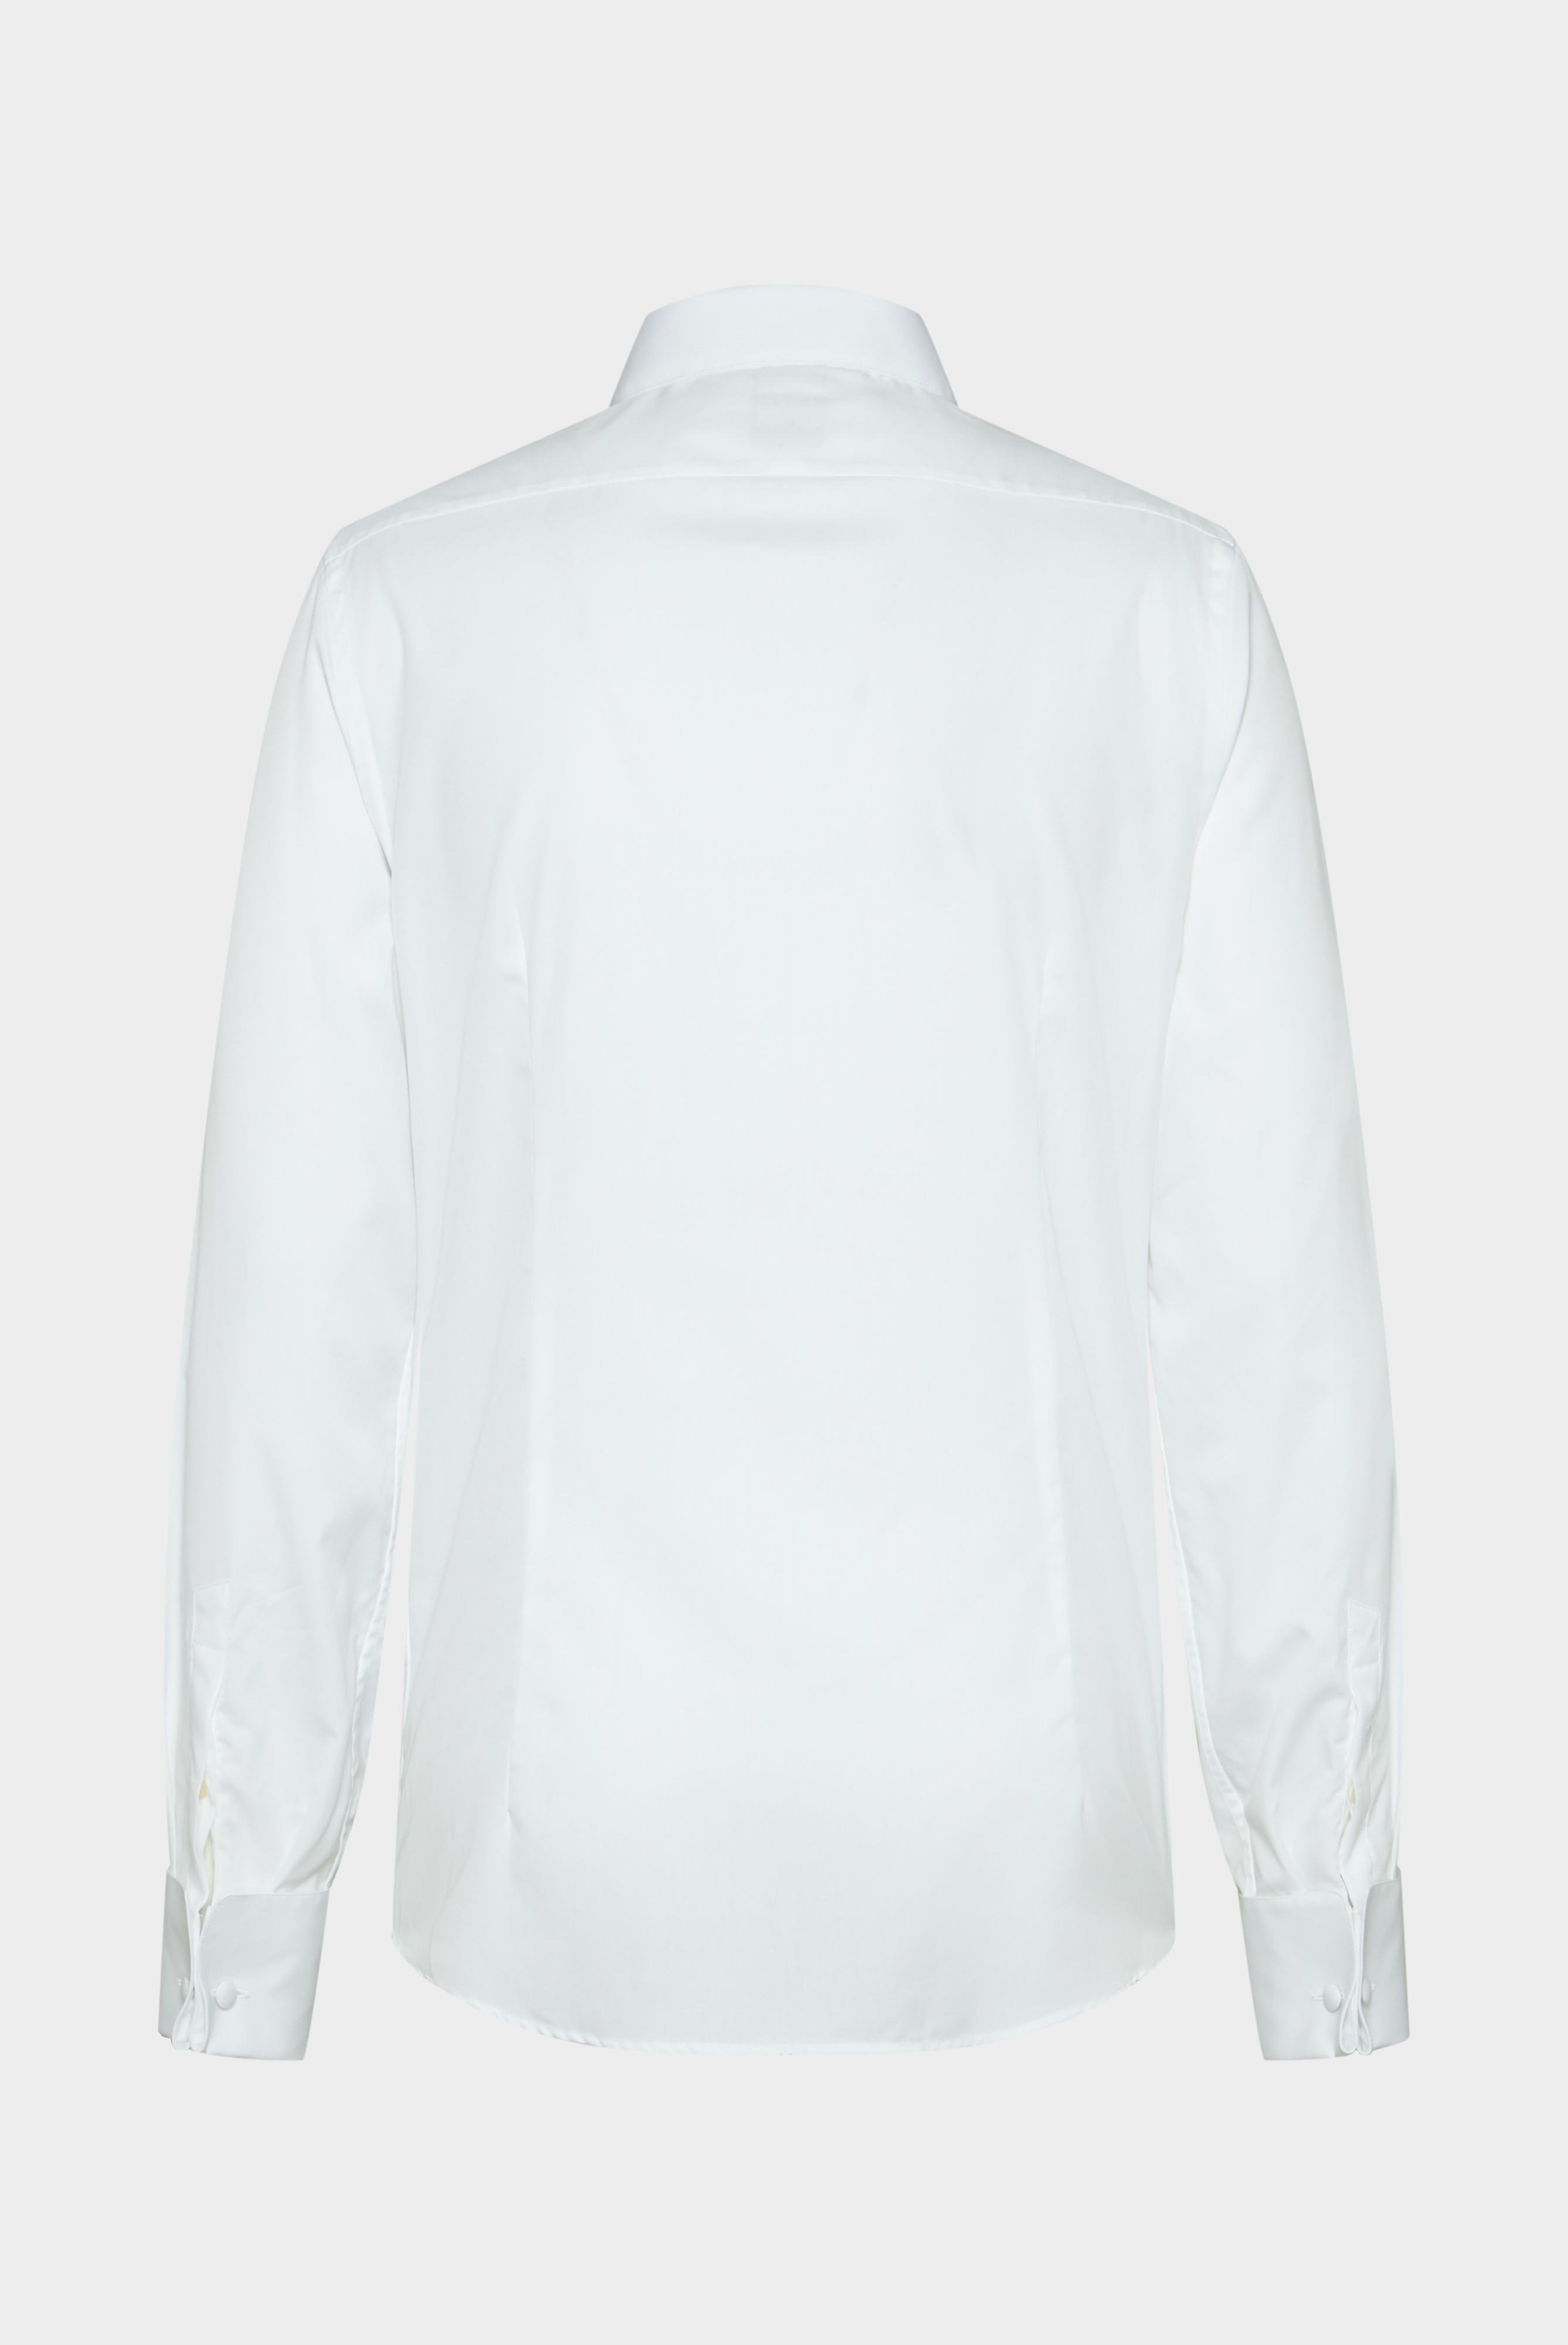 Festliche Hemden+Smokinghemd Slim Fit+20.2063.NV.130648.000.37